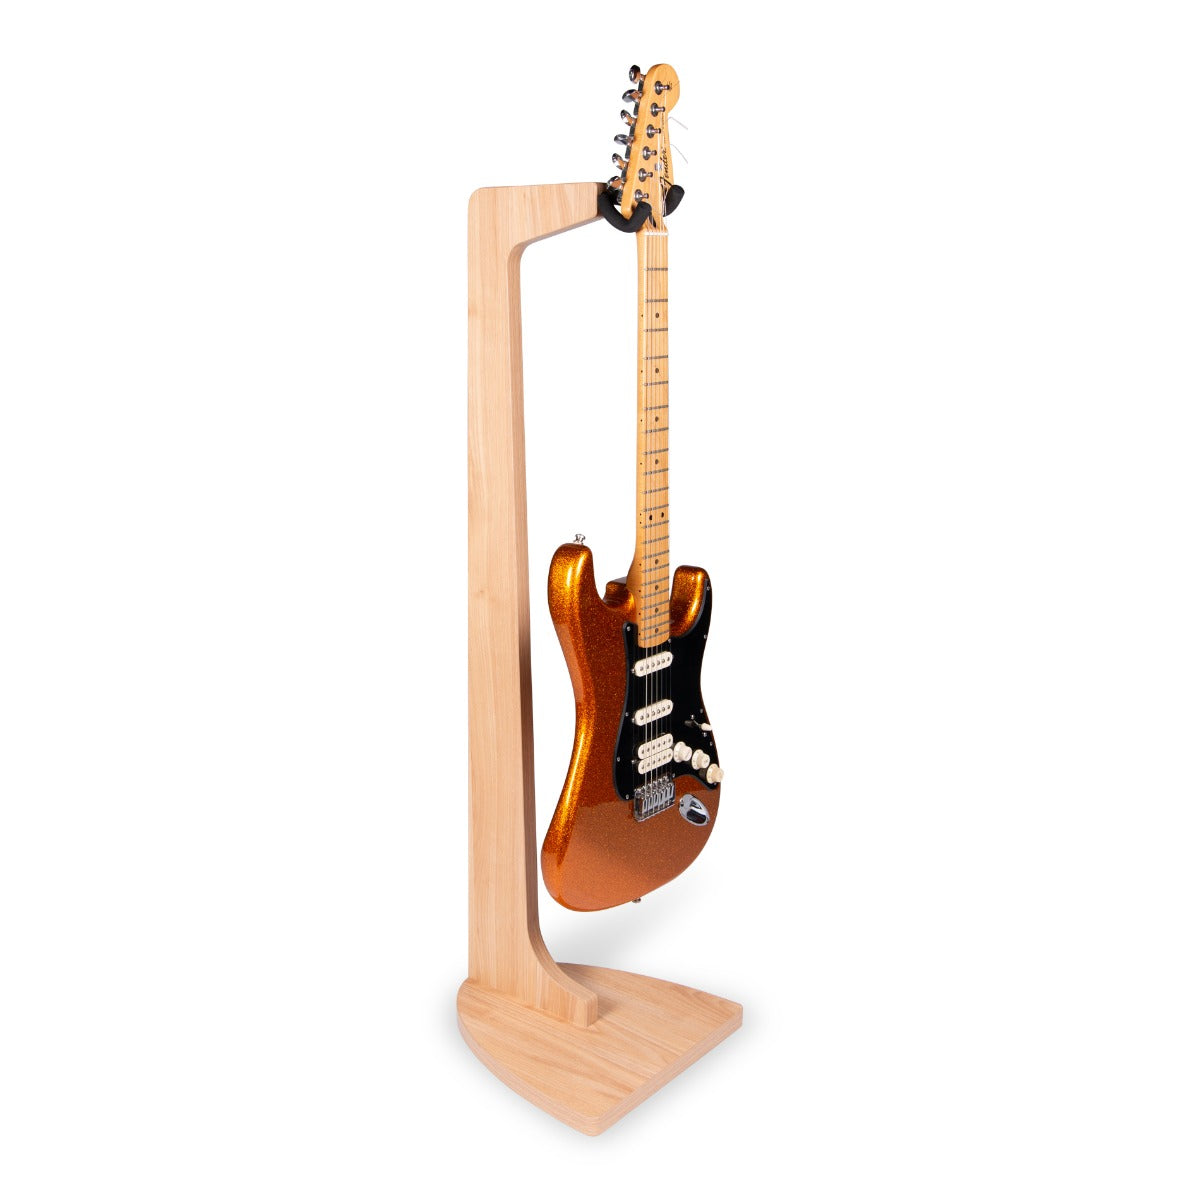 Gator Frameworks Elite Series Hanging Guitar Stand - Maple, View 8